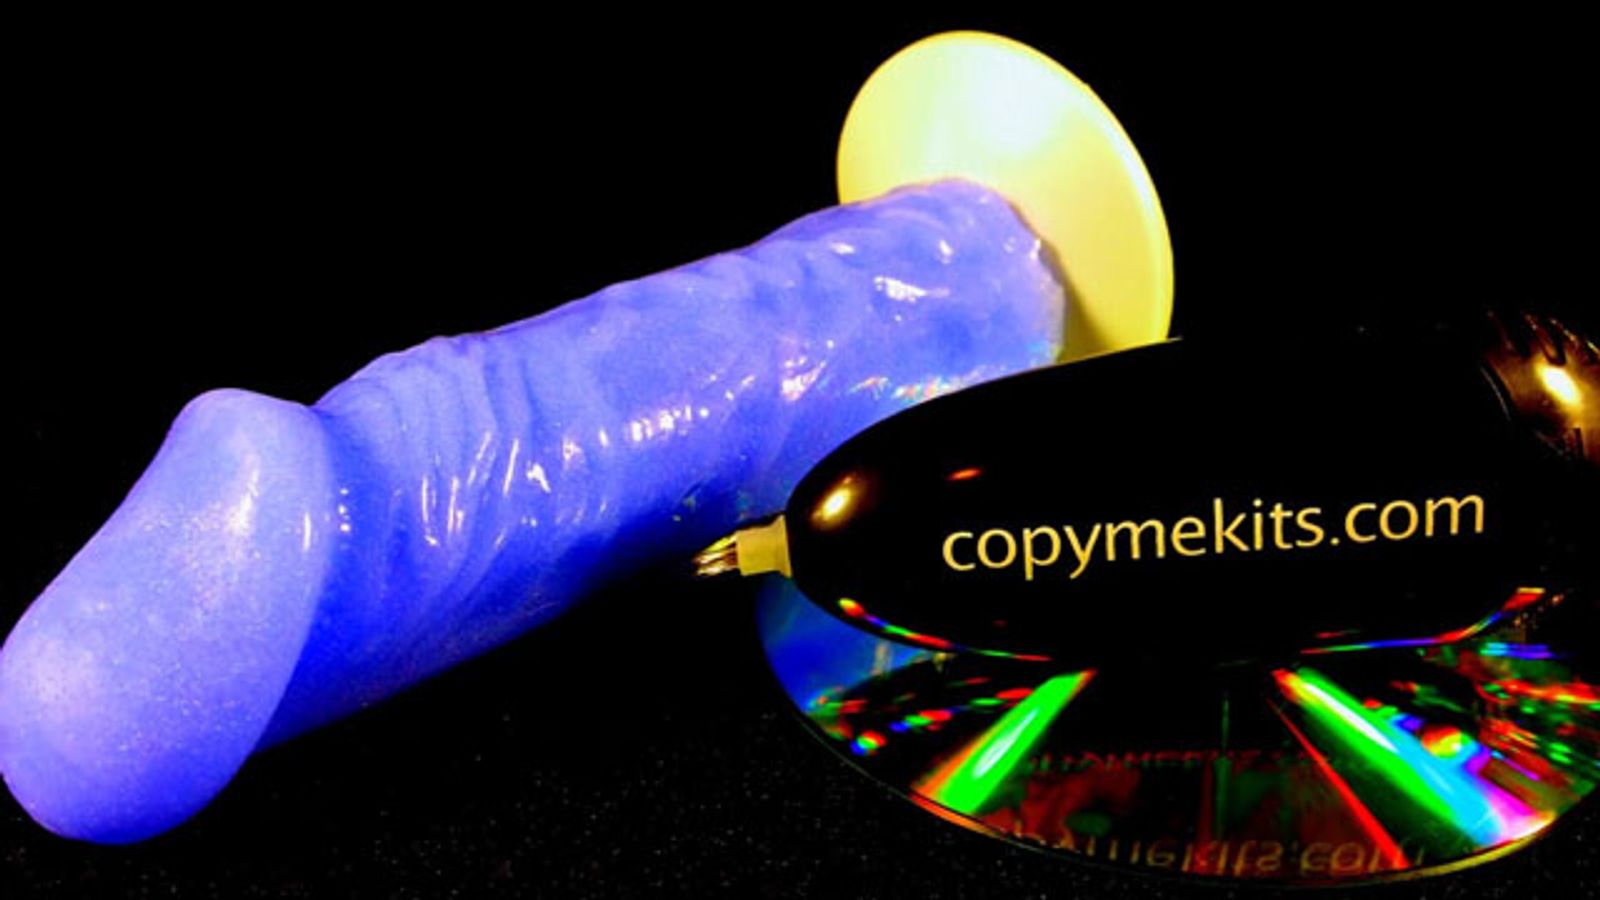 Copy Me! Kits Takes Penis Casting to the Next Level